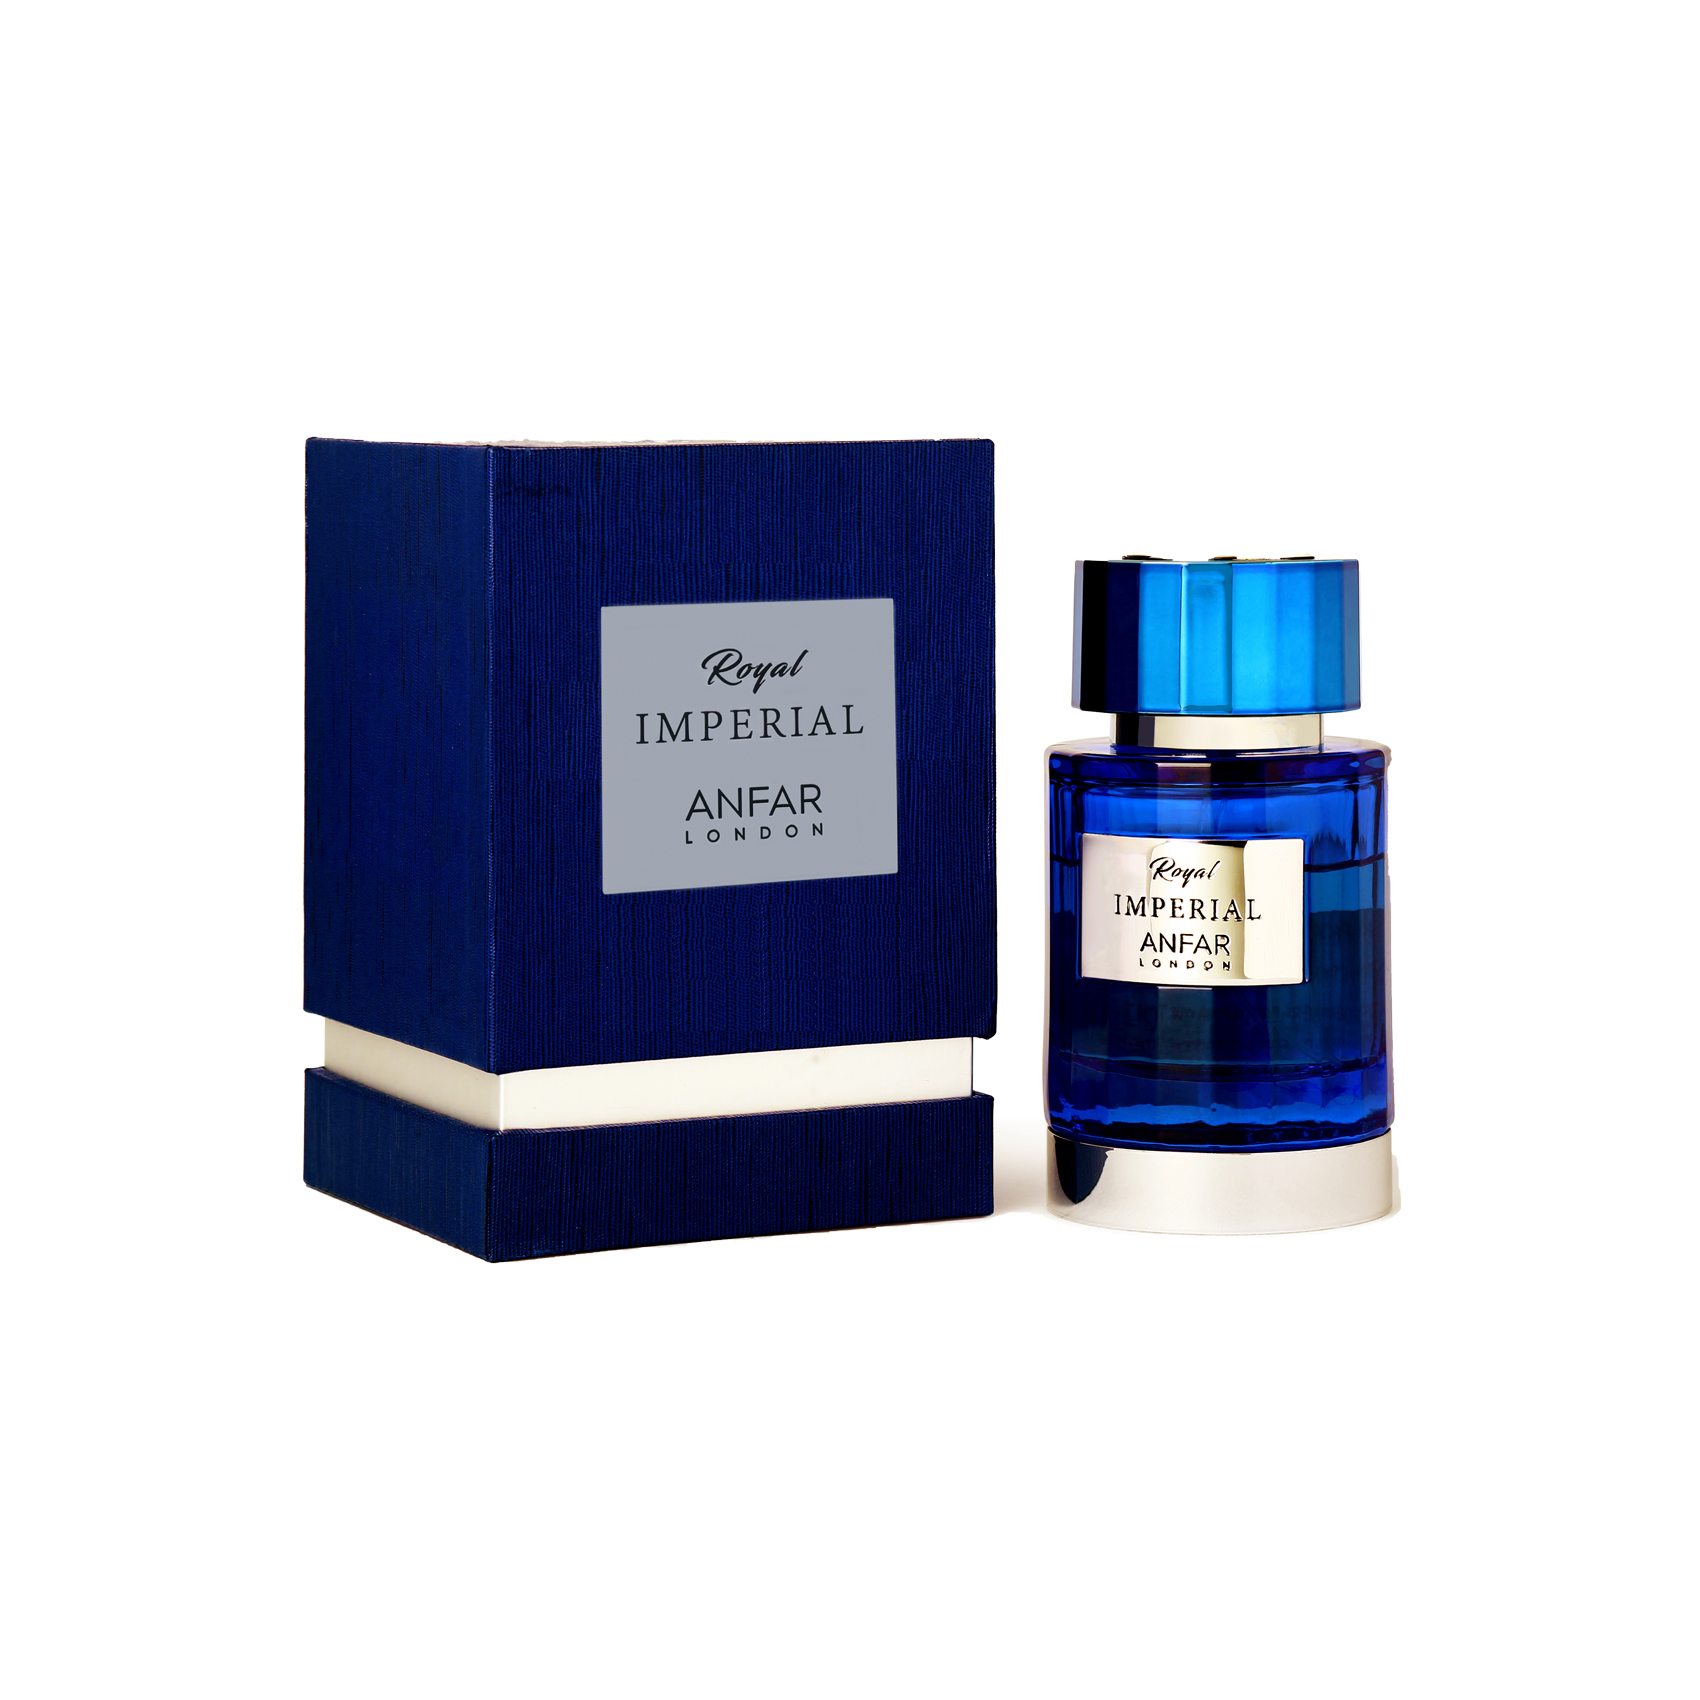 Royal Imperial Edp 100 ml Perfume For Men London By Anfar London 